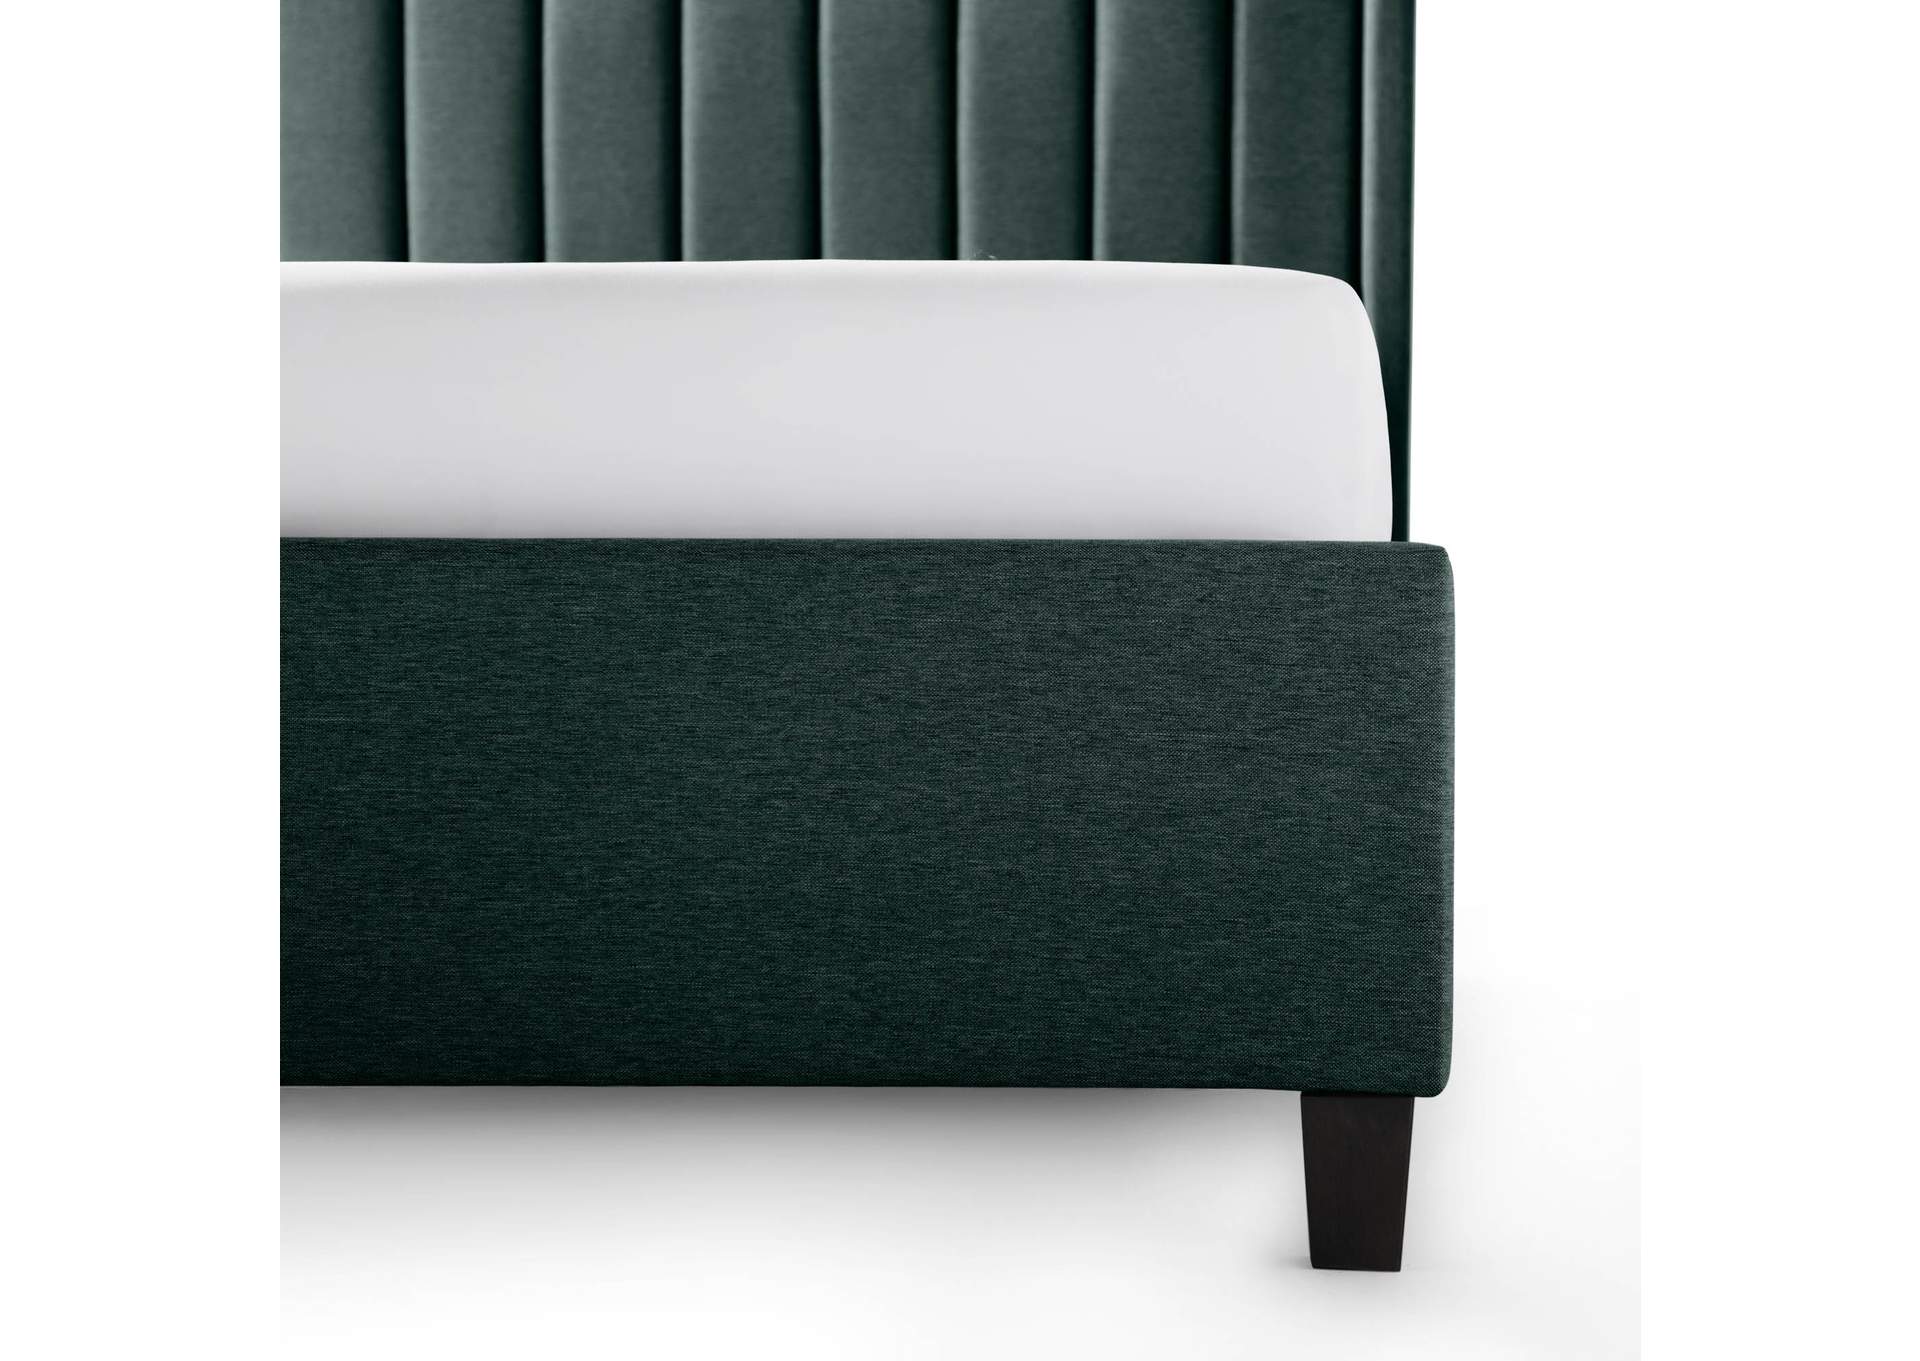 Malouf Charcoal Blackwell Upholstered Bed w/ Wingback Headboard - California King Size,Malouf